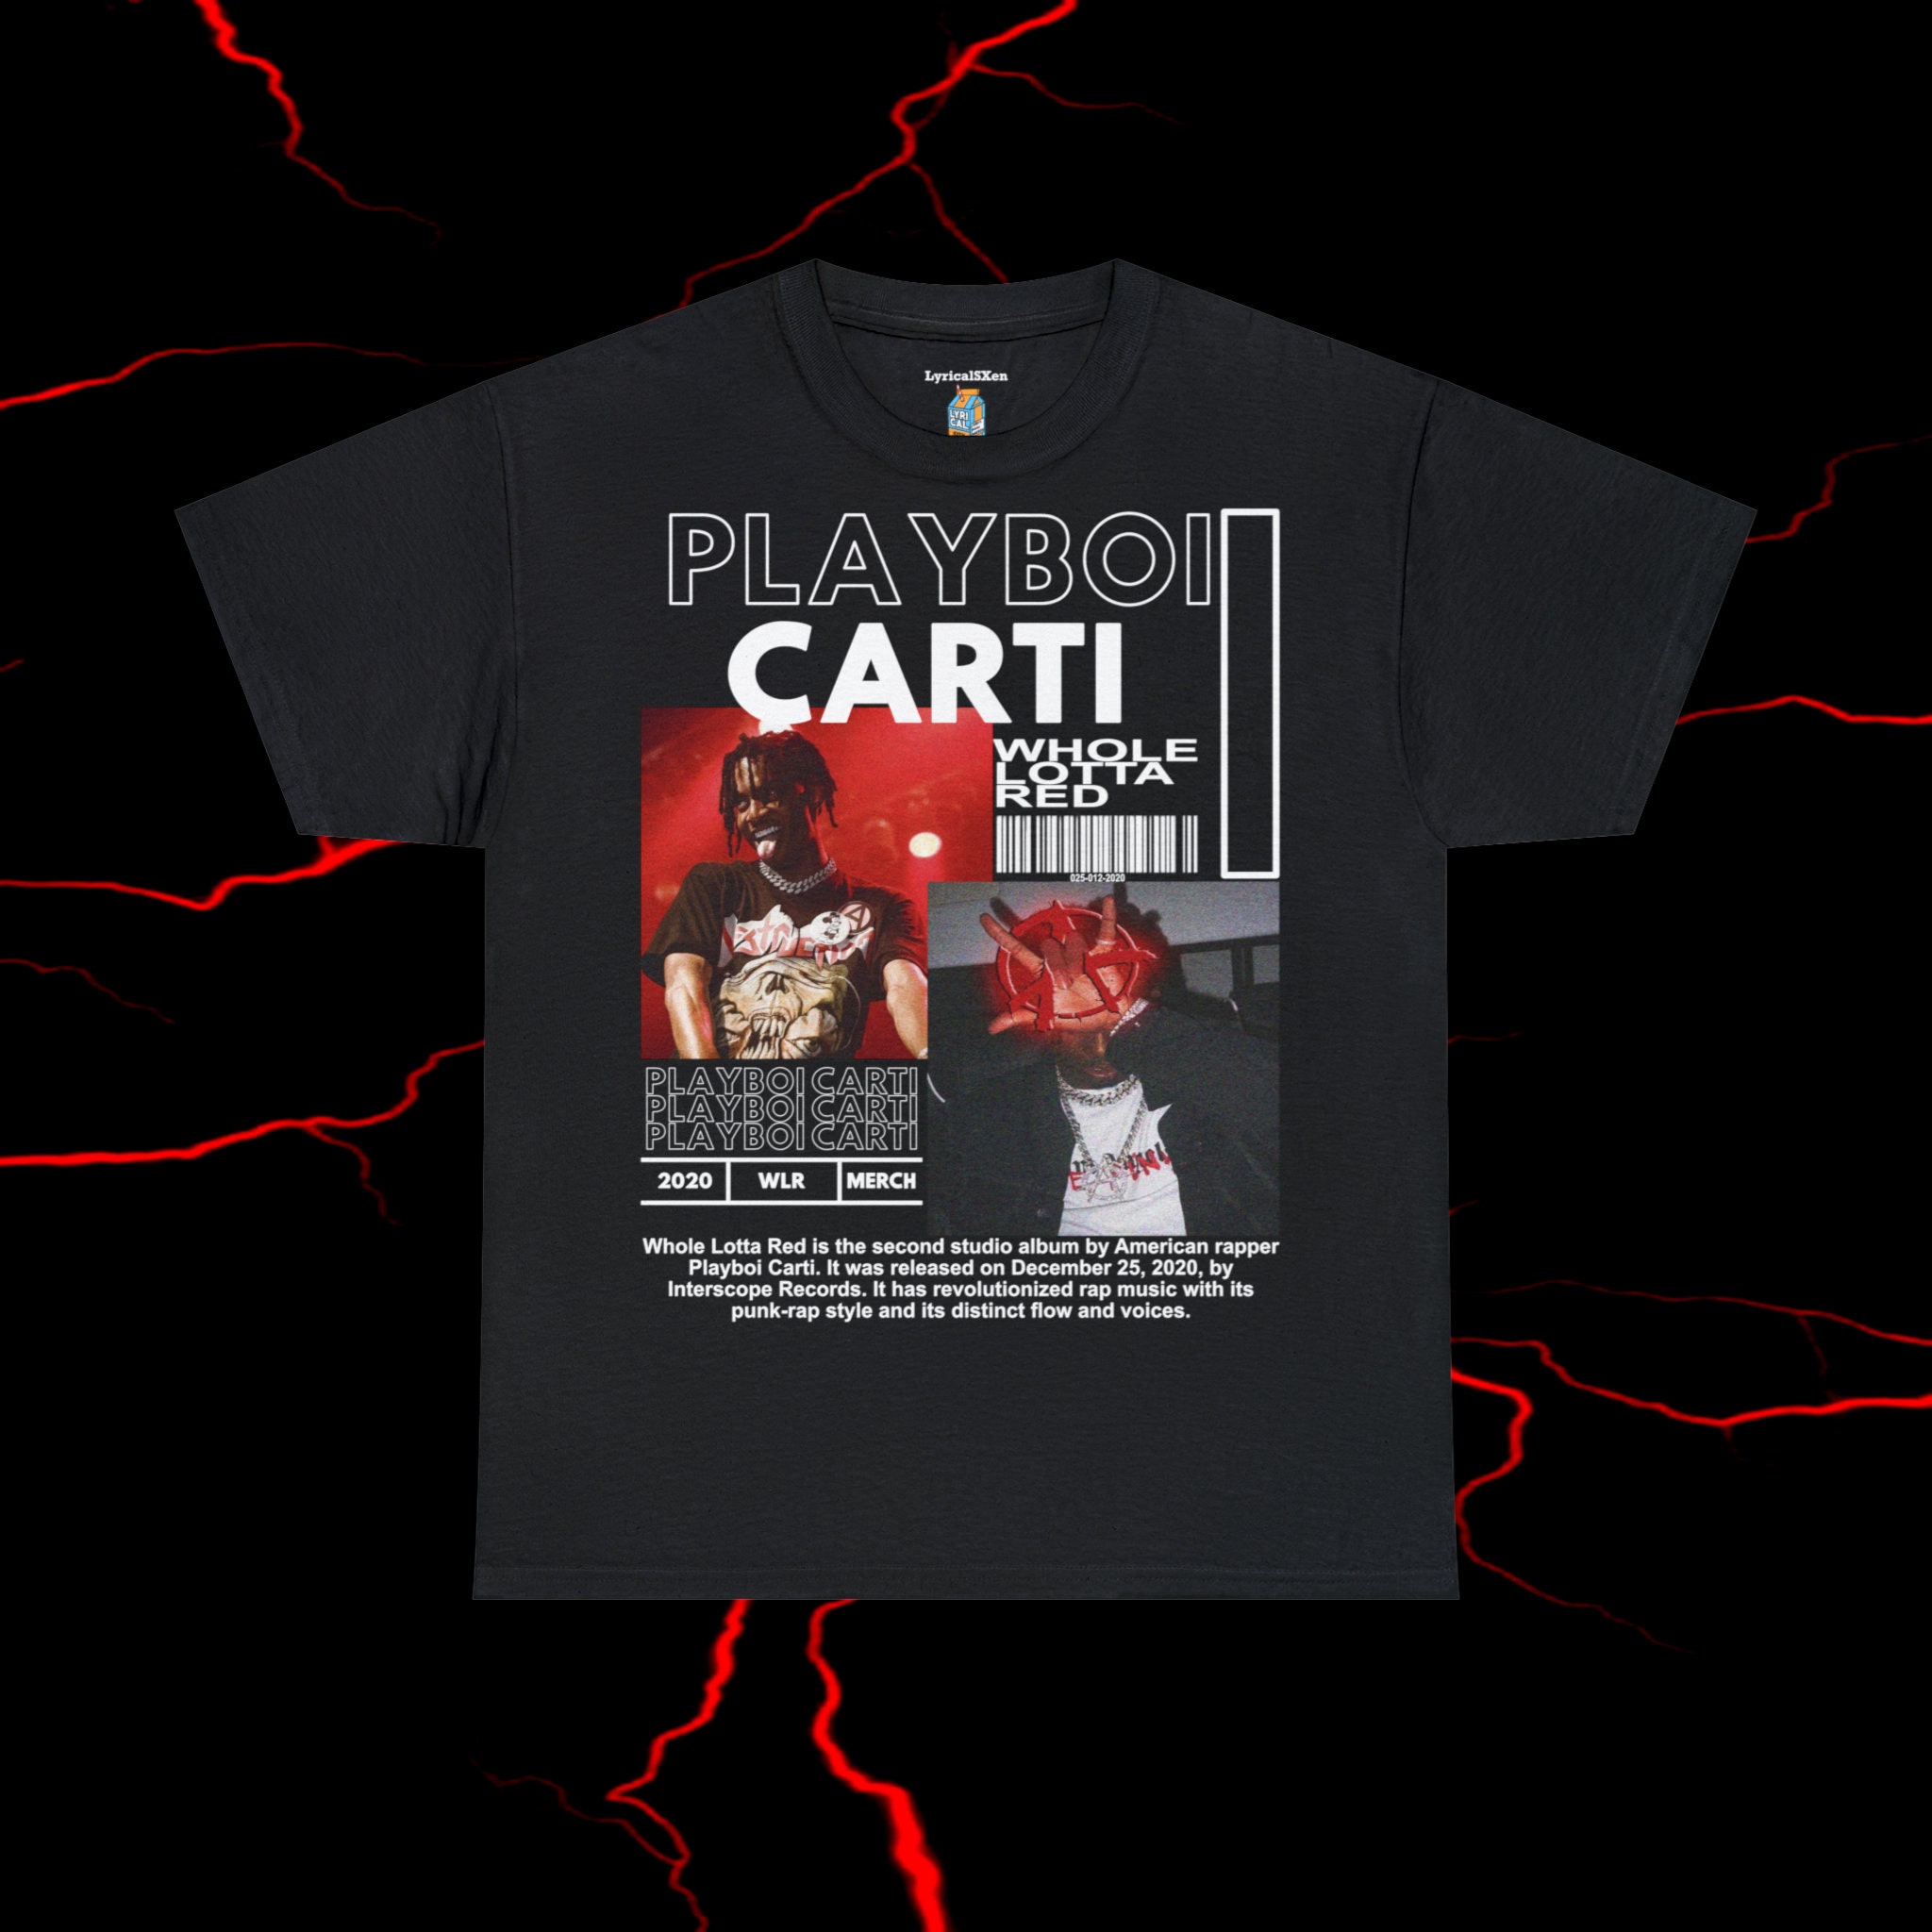 Playboi Carti Whole Lotta Red Tee Shirt Hip Hop T-Shirt Rap T Shirt